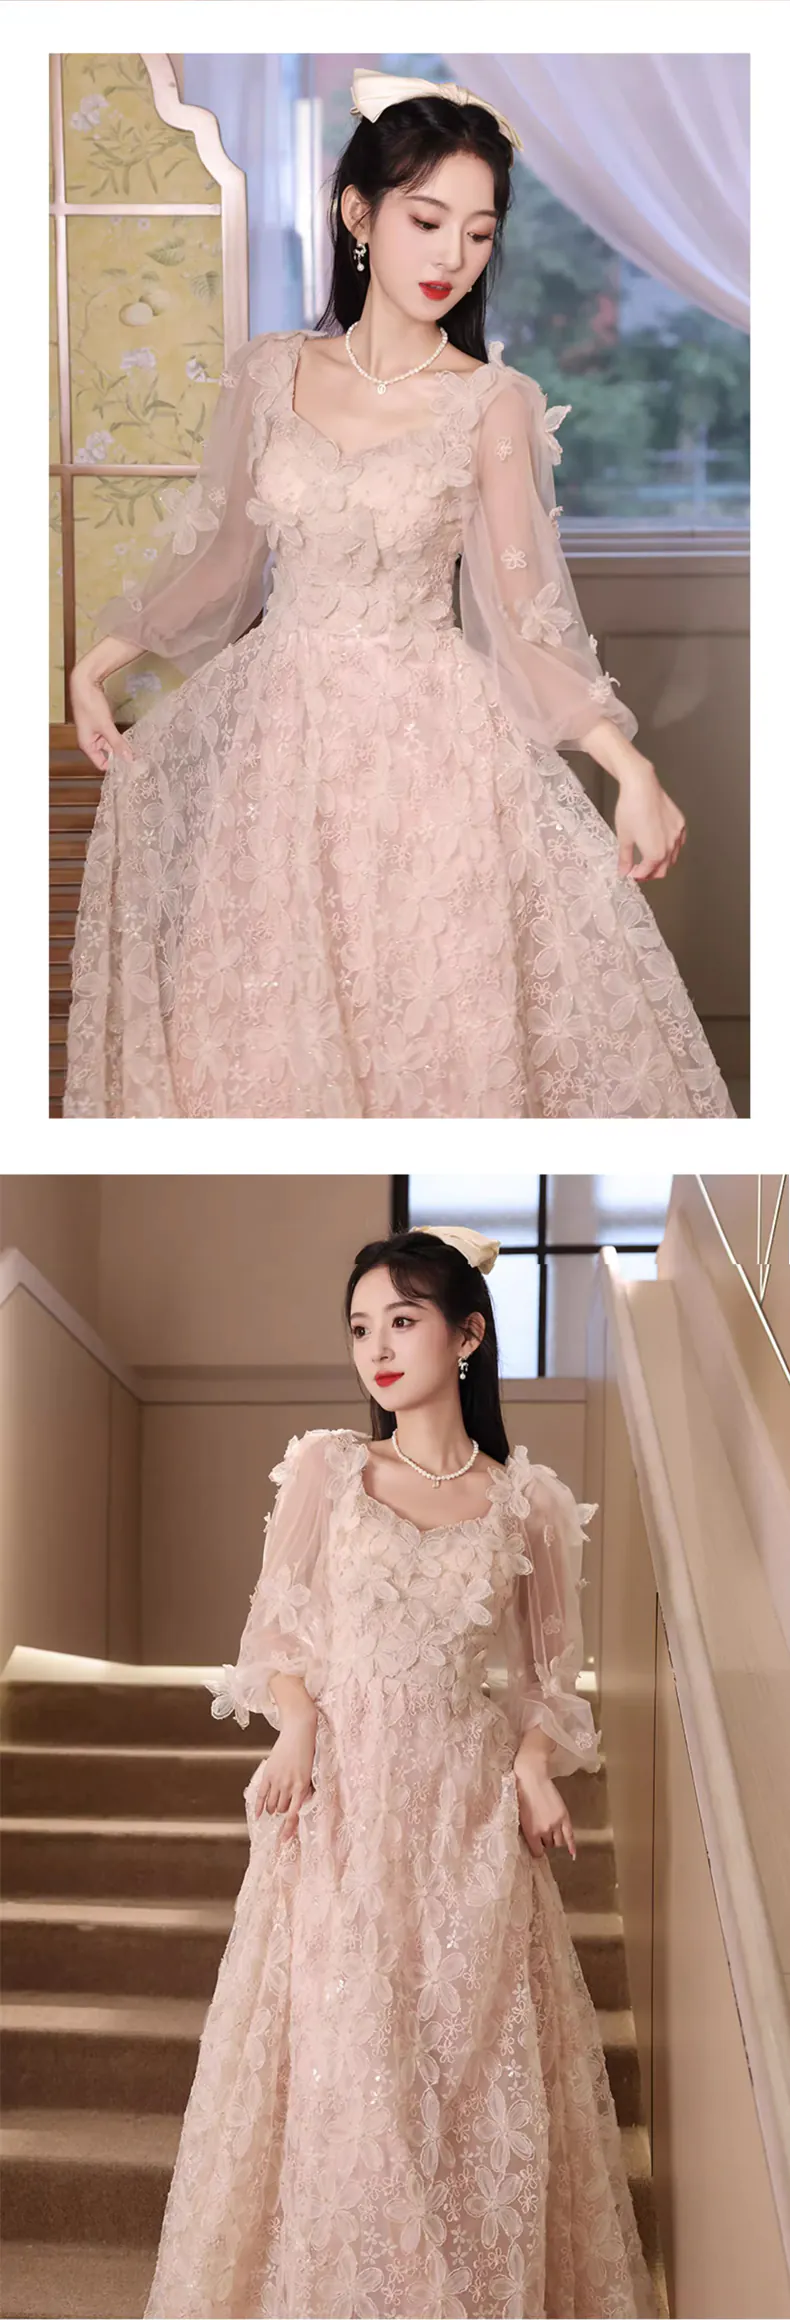 Elegant-Pink-Flower-Petal-Long-Tulle-Sleeve-Cocktail-Prom-Party-Dress10